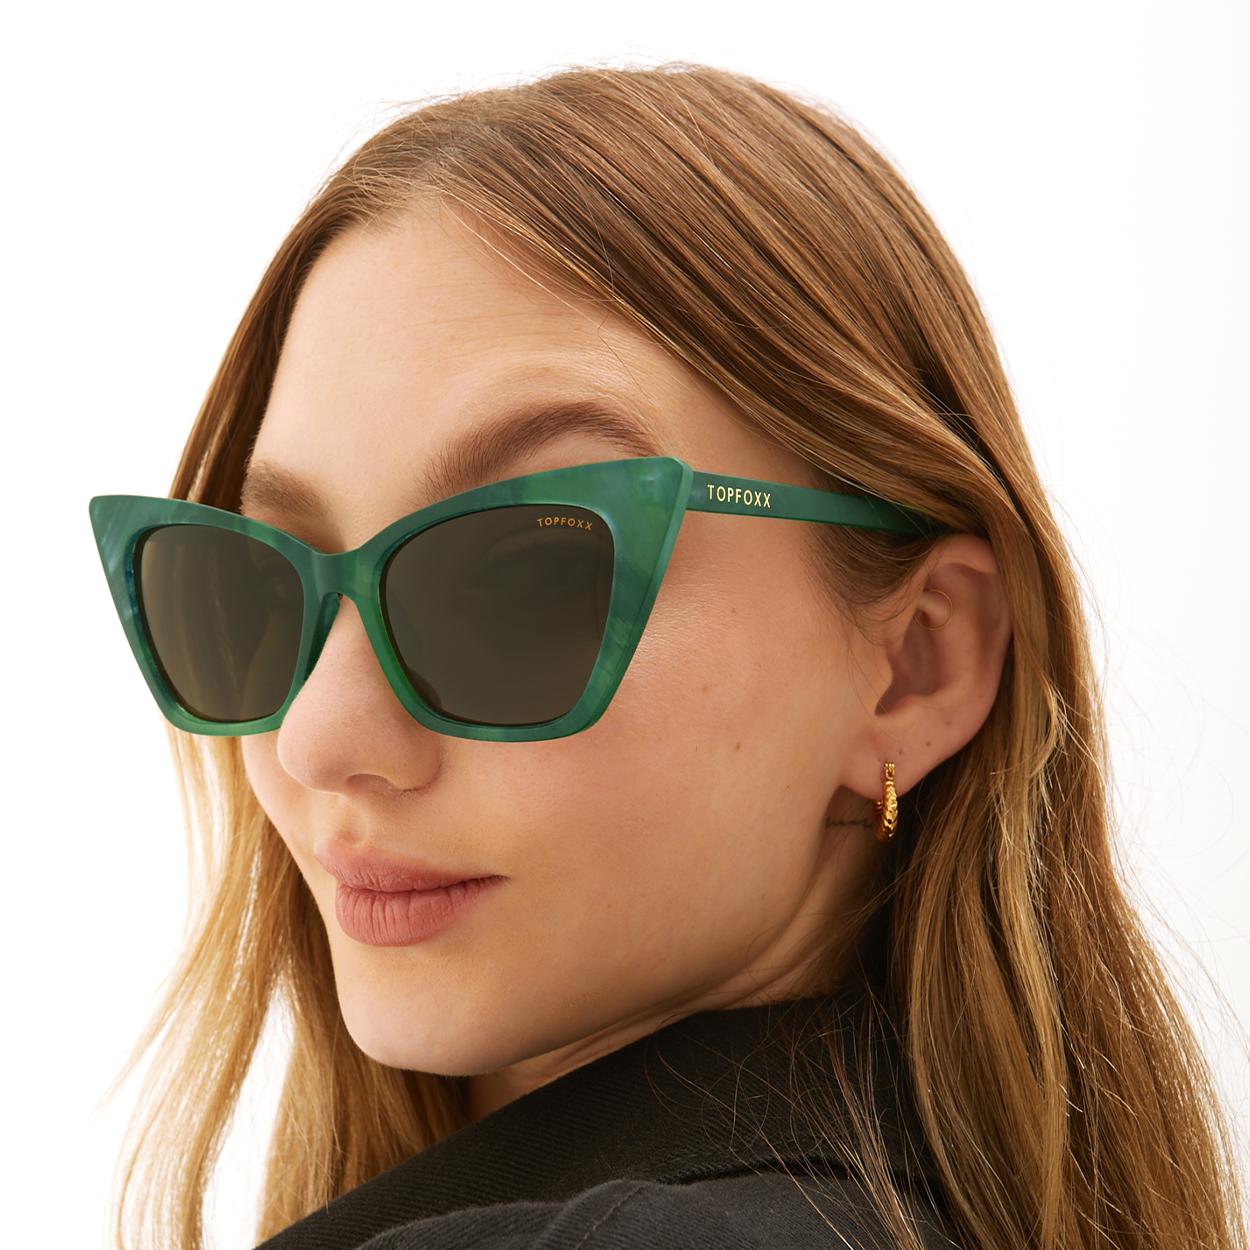 Sustainable Sunglasses for Women - Oversized Cat Eye Shades - Nature - Amazon Rainforest - Model - TopFoxx